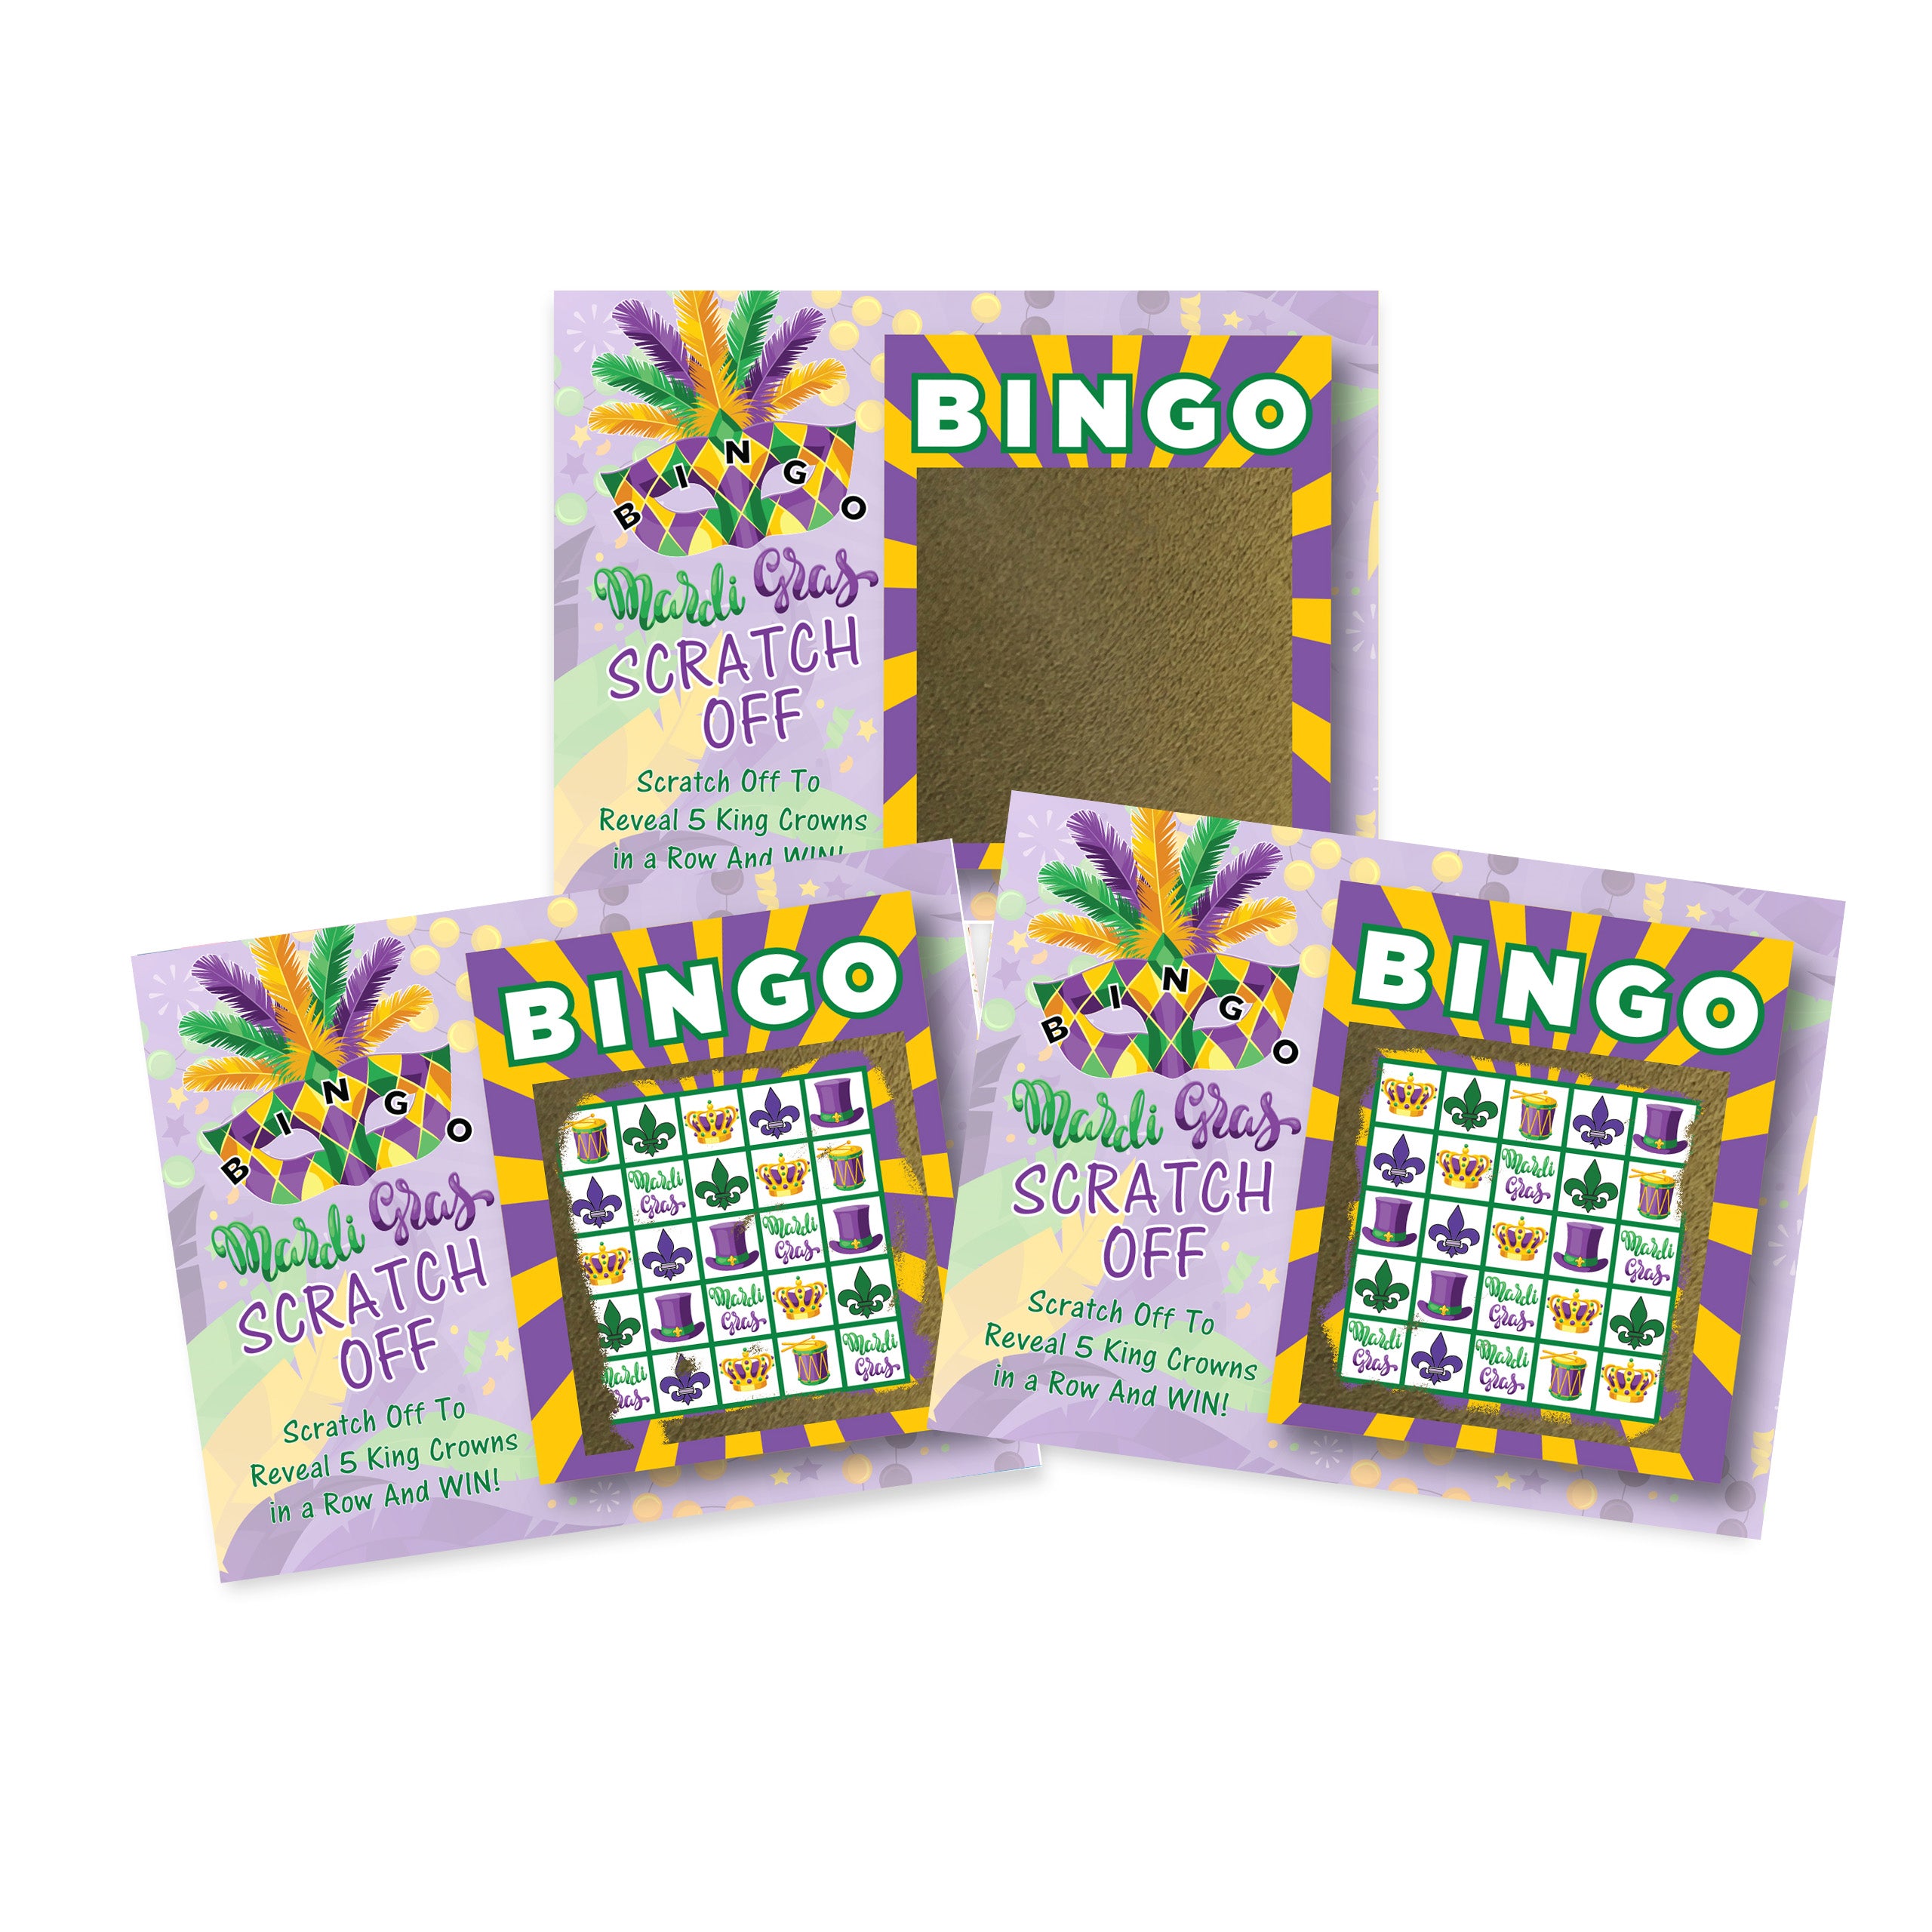 Mardi Gras Bingo Scratch Off Game 26 Pack - 2 Bingo and 24 Non-Bingo Cards - My Scratch Offs